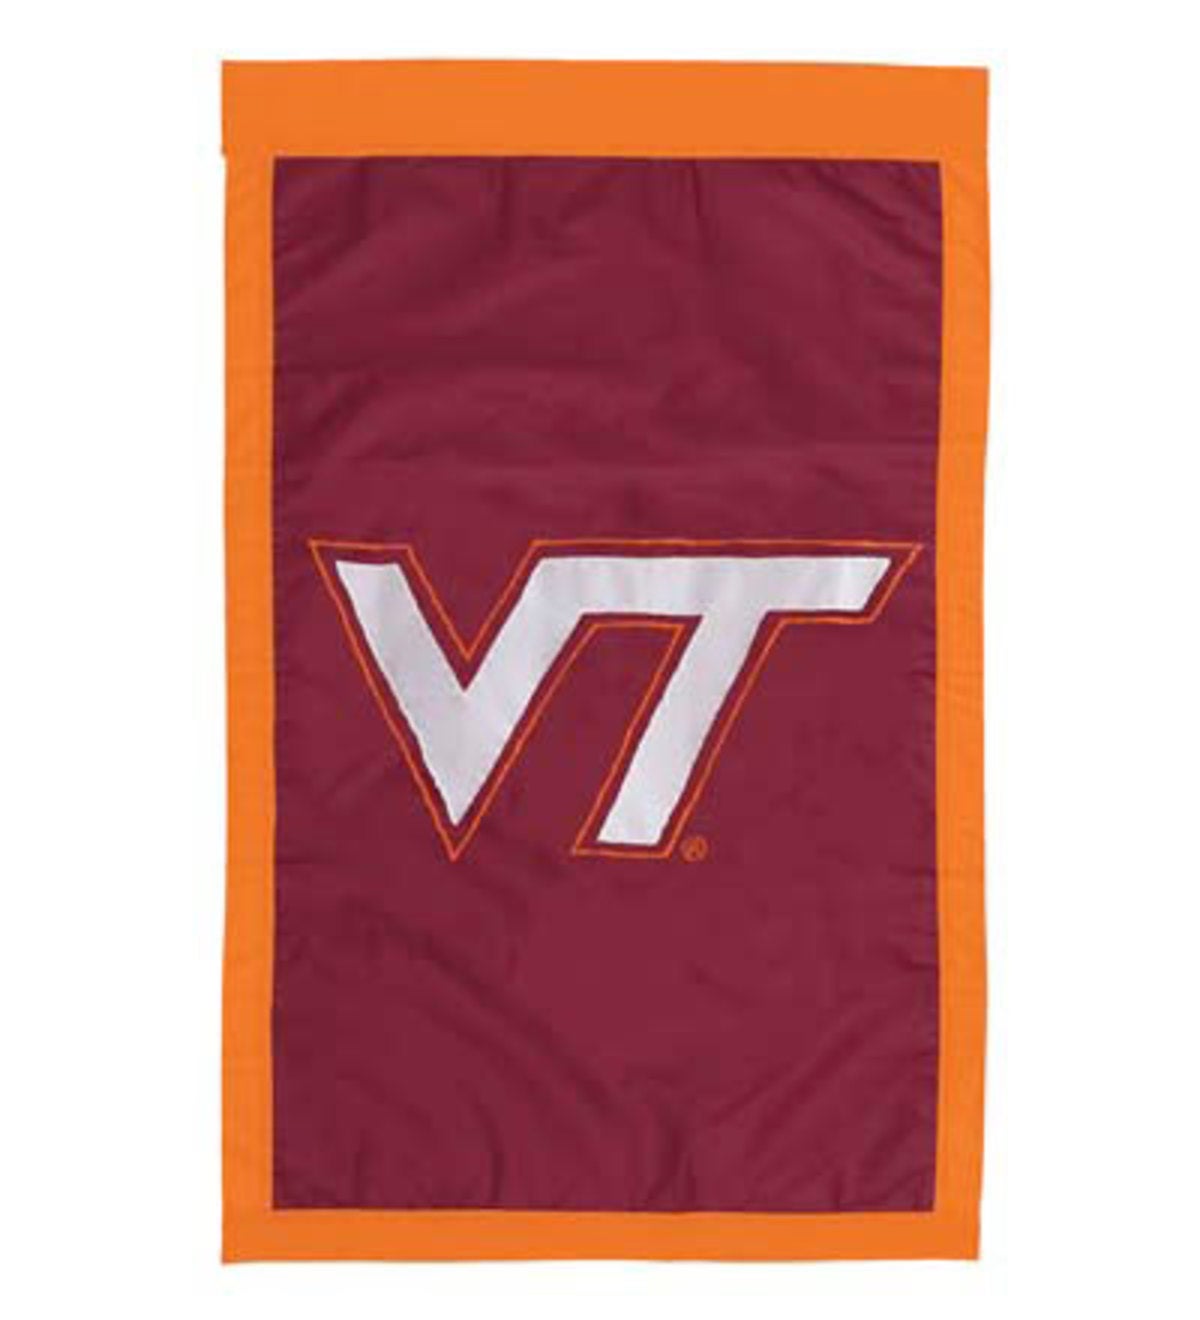 2 Sided Collegiate Flags - Virginia Tech